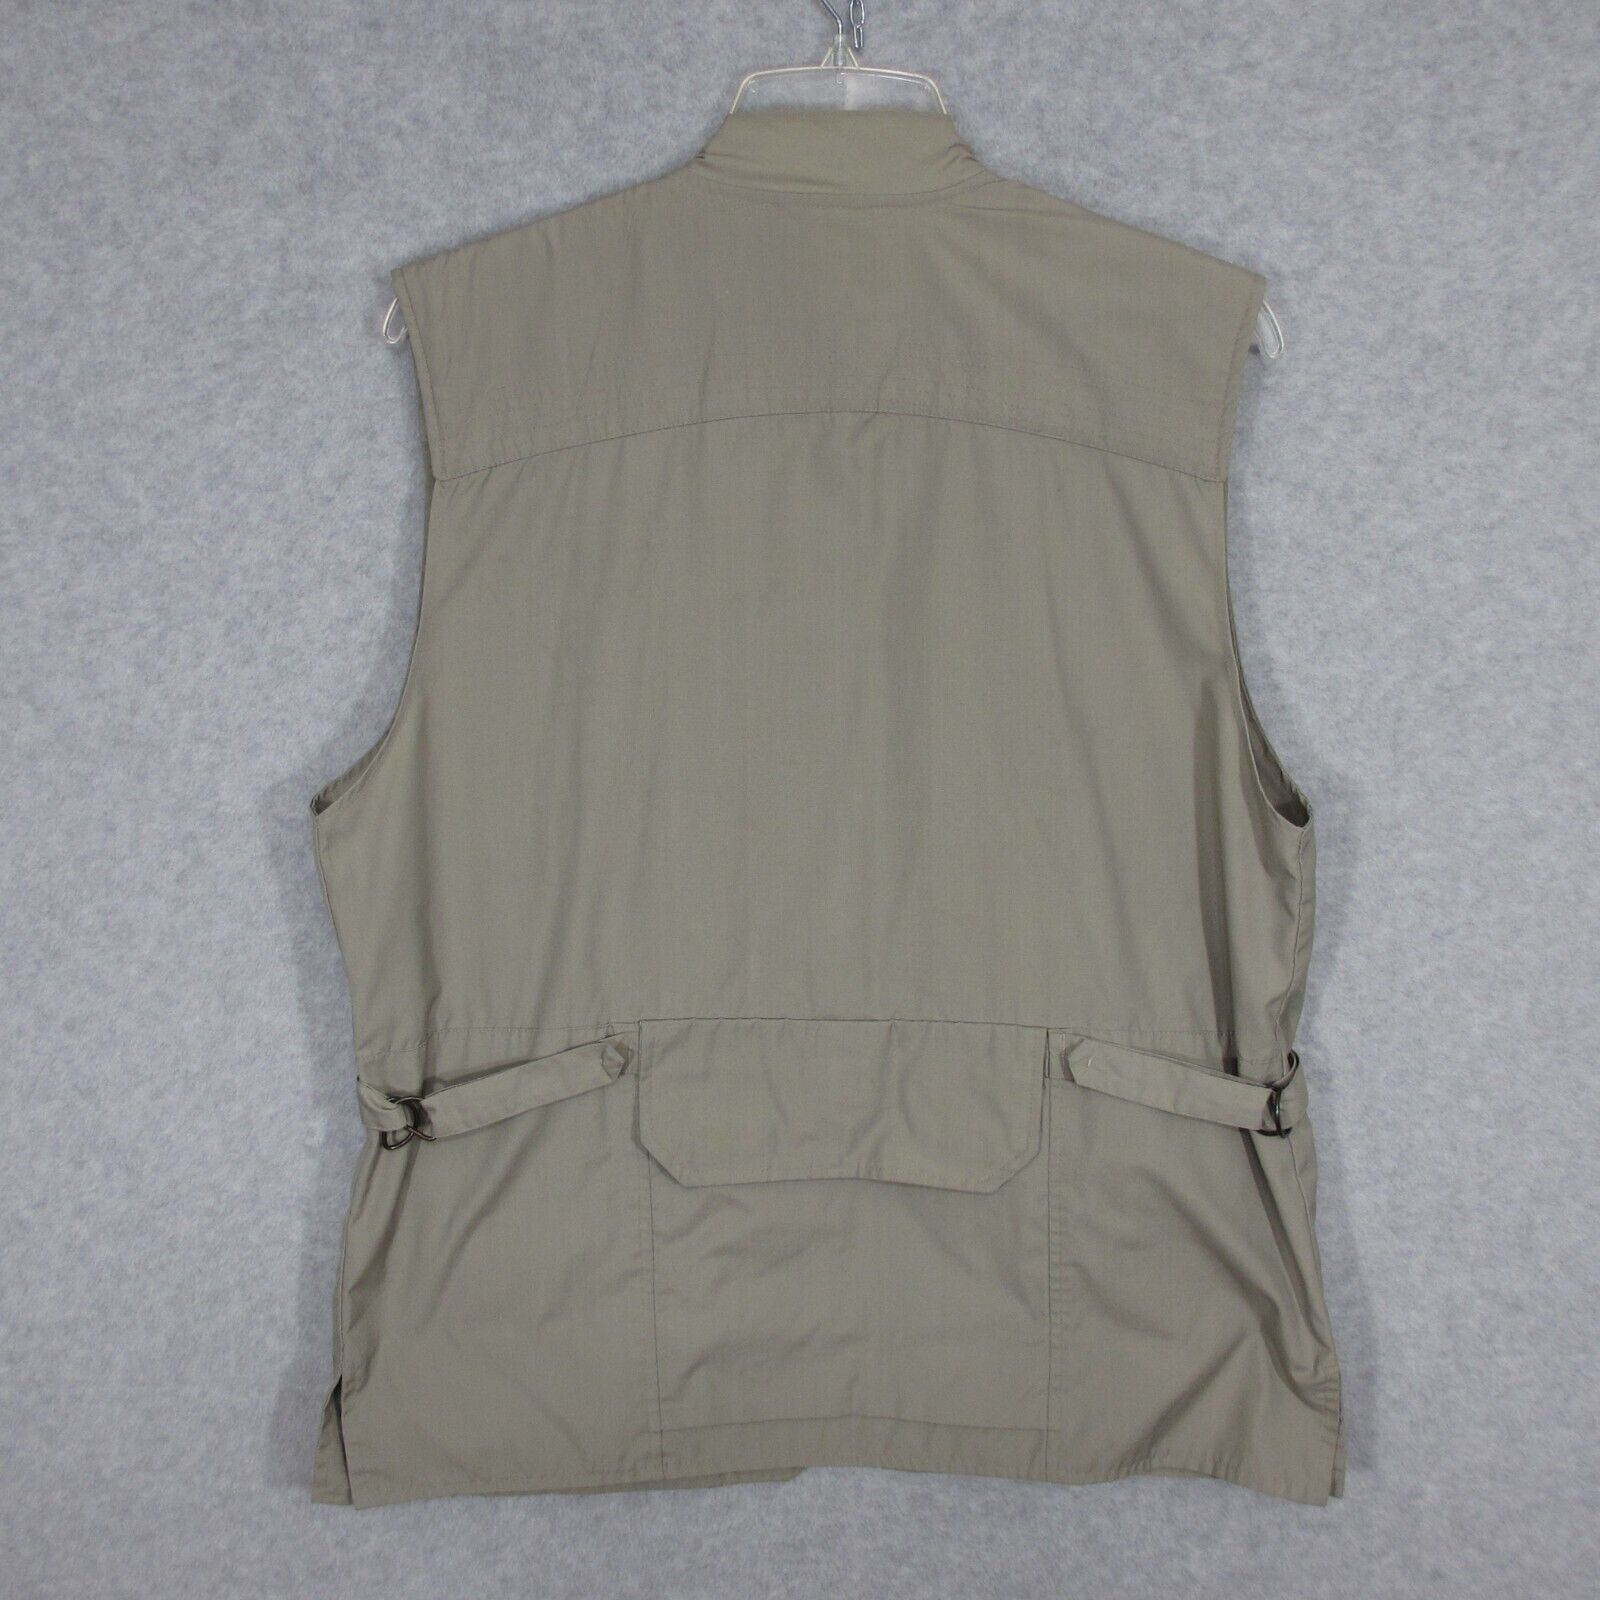 Primary image for Scandia Woods Men's Fishing Vest Brown Tan Zip Size Medium Pockets Travel